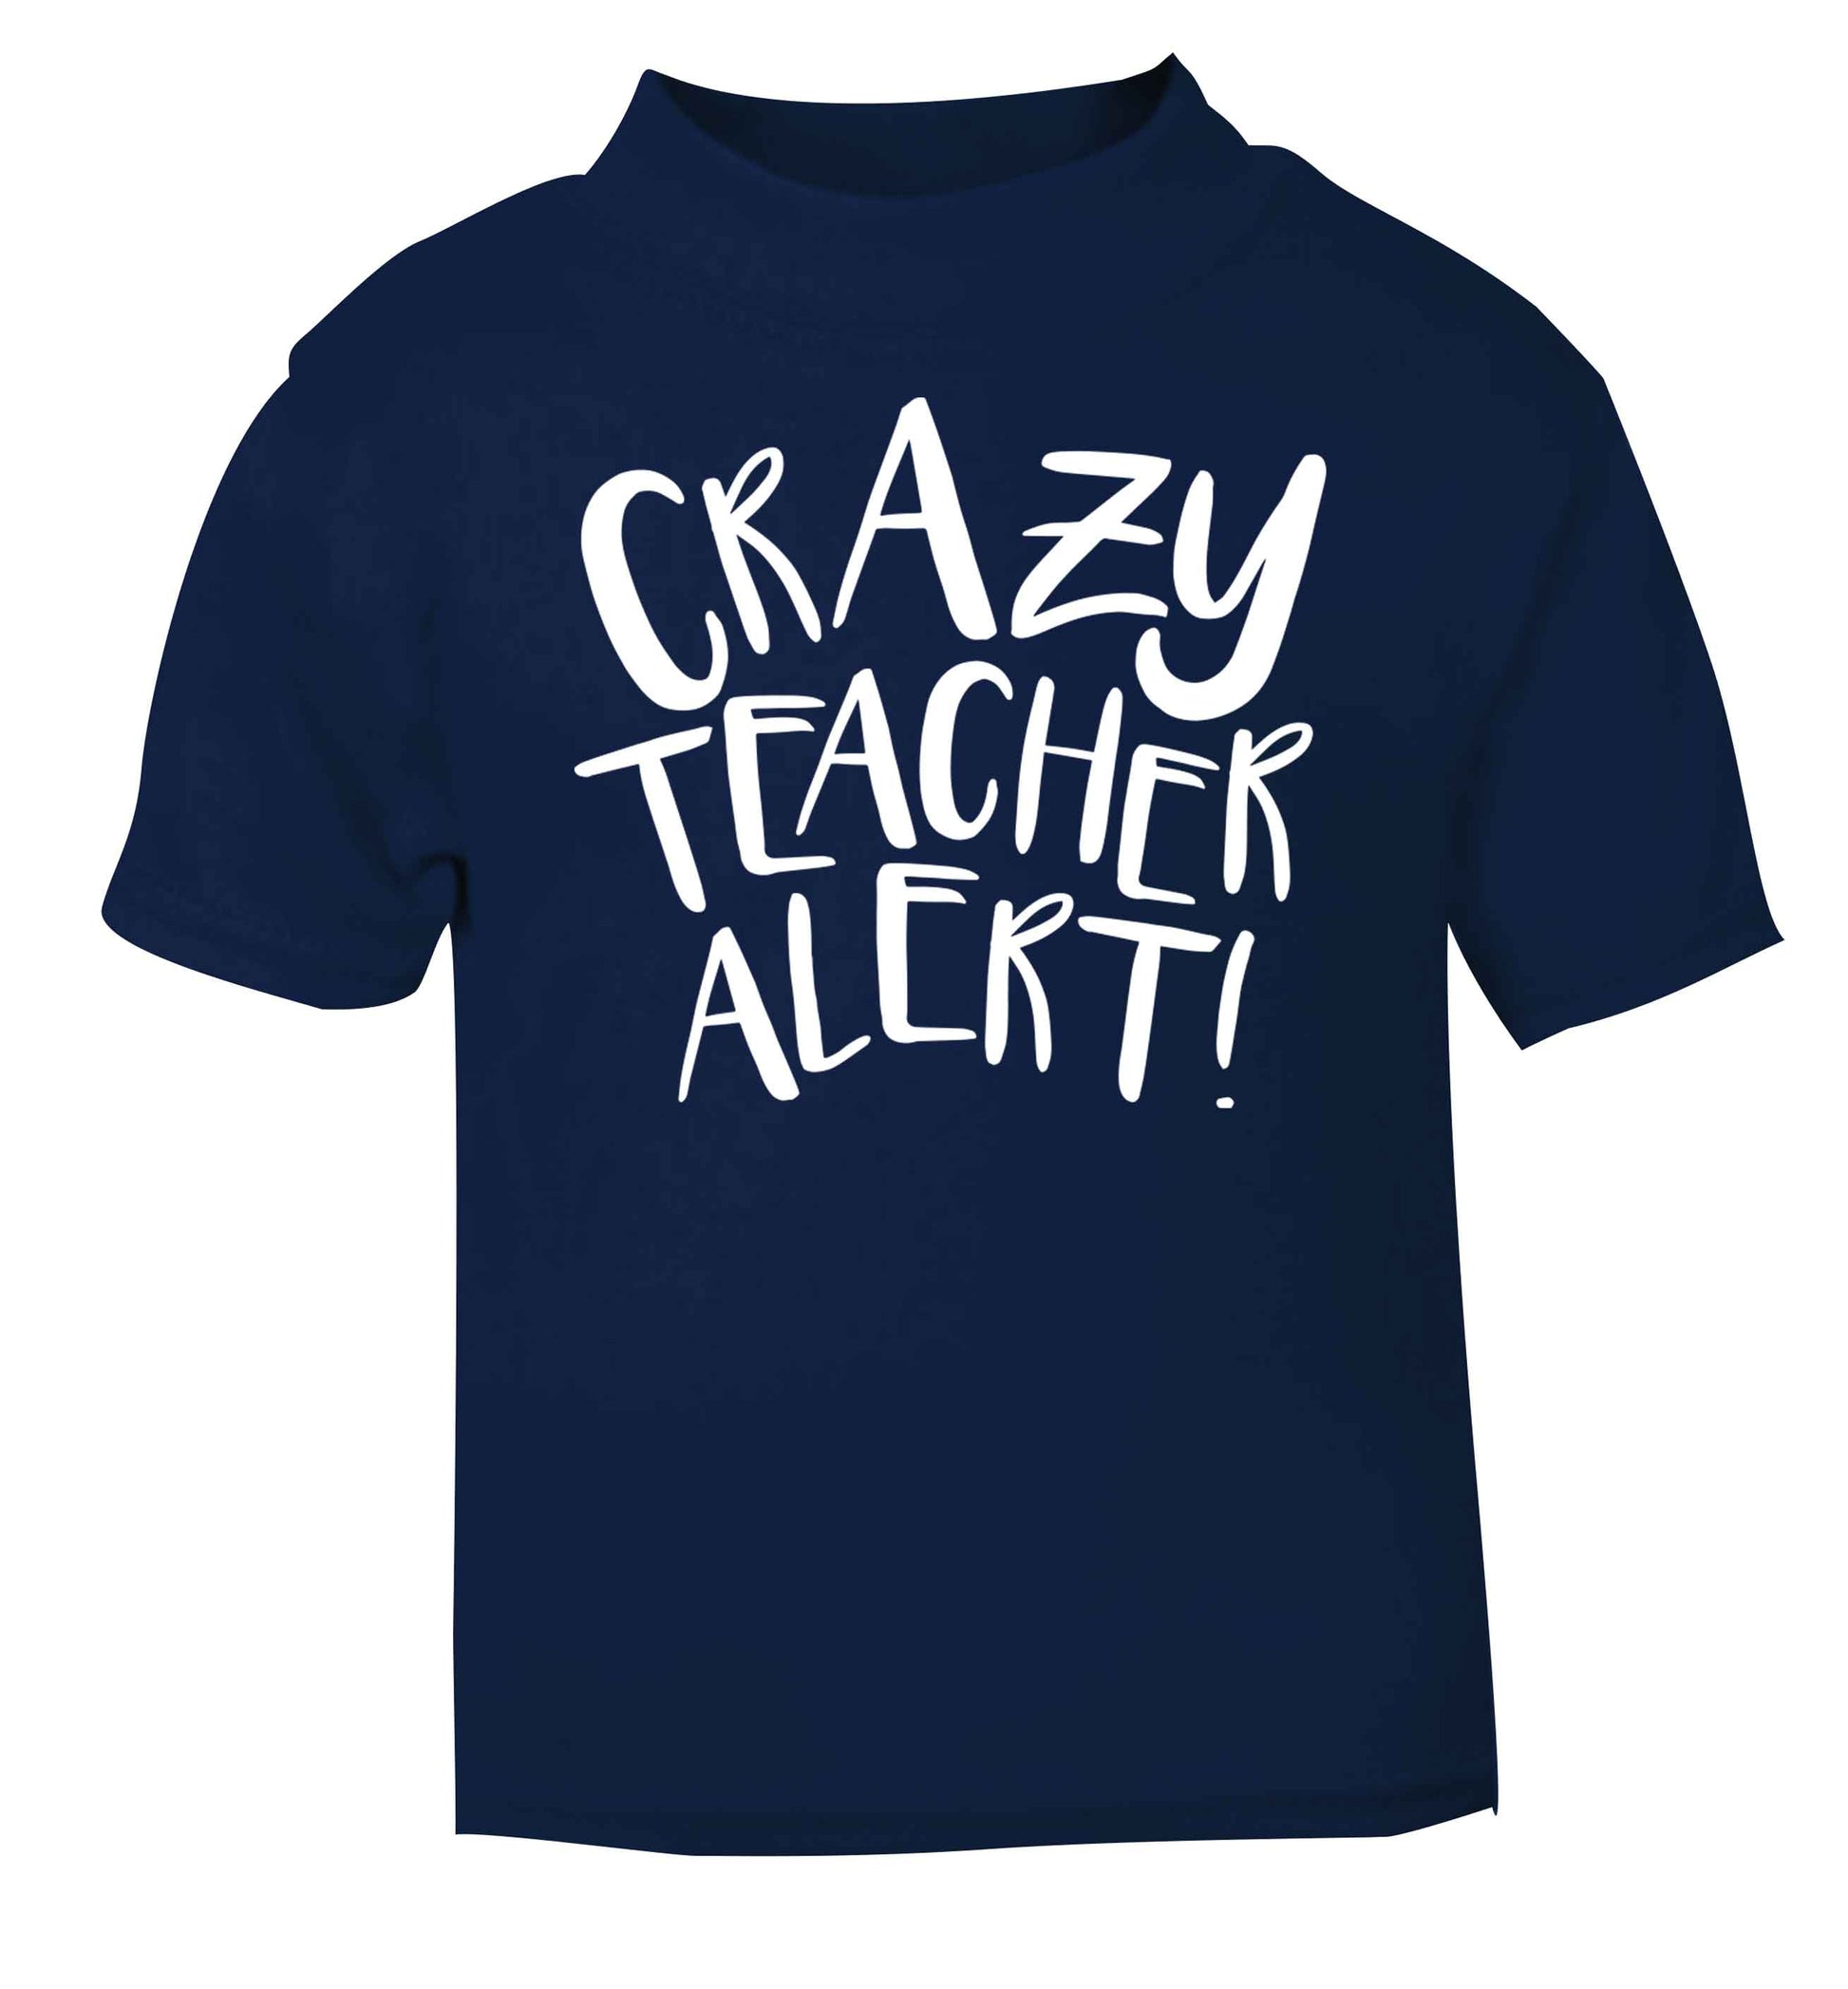 Crazy teacher alert navy baby toddler Tshirt 2 Years